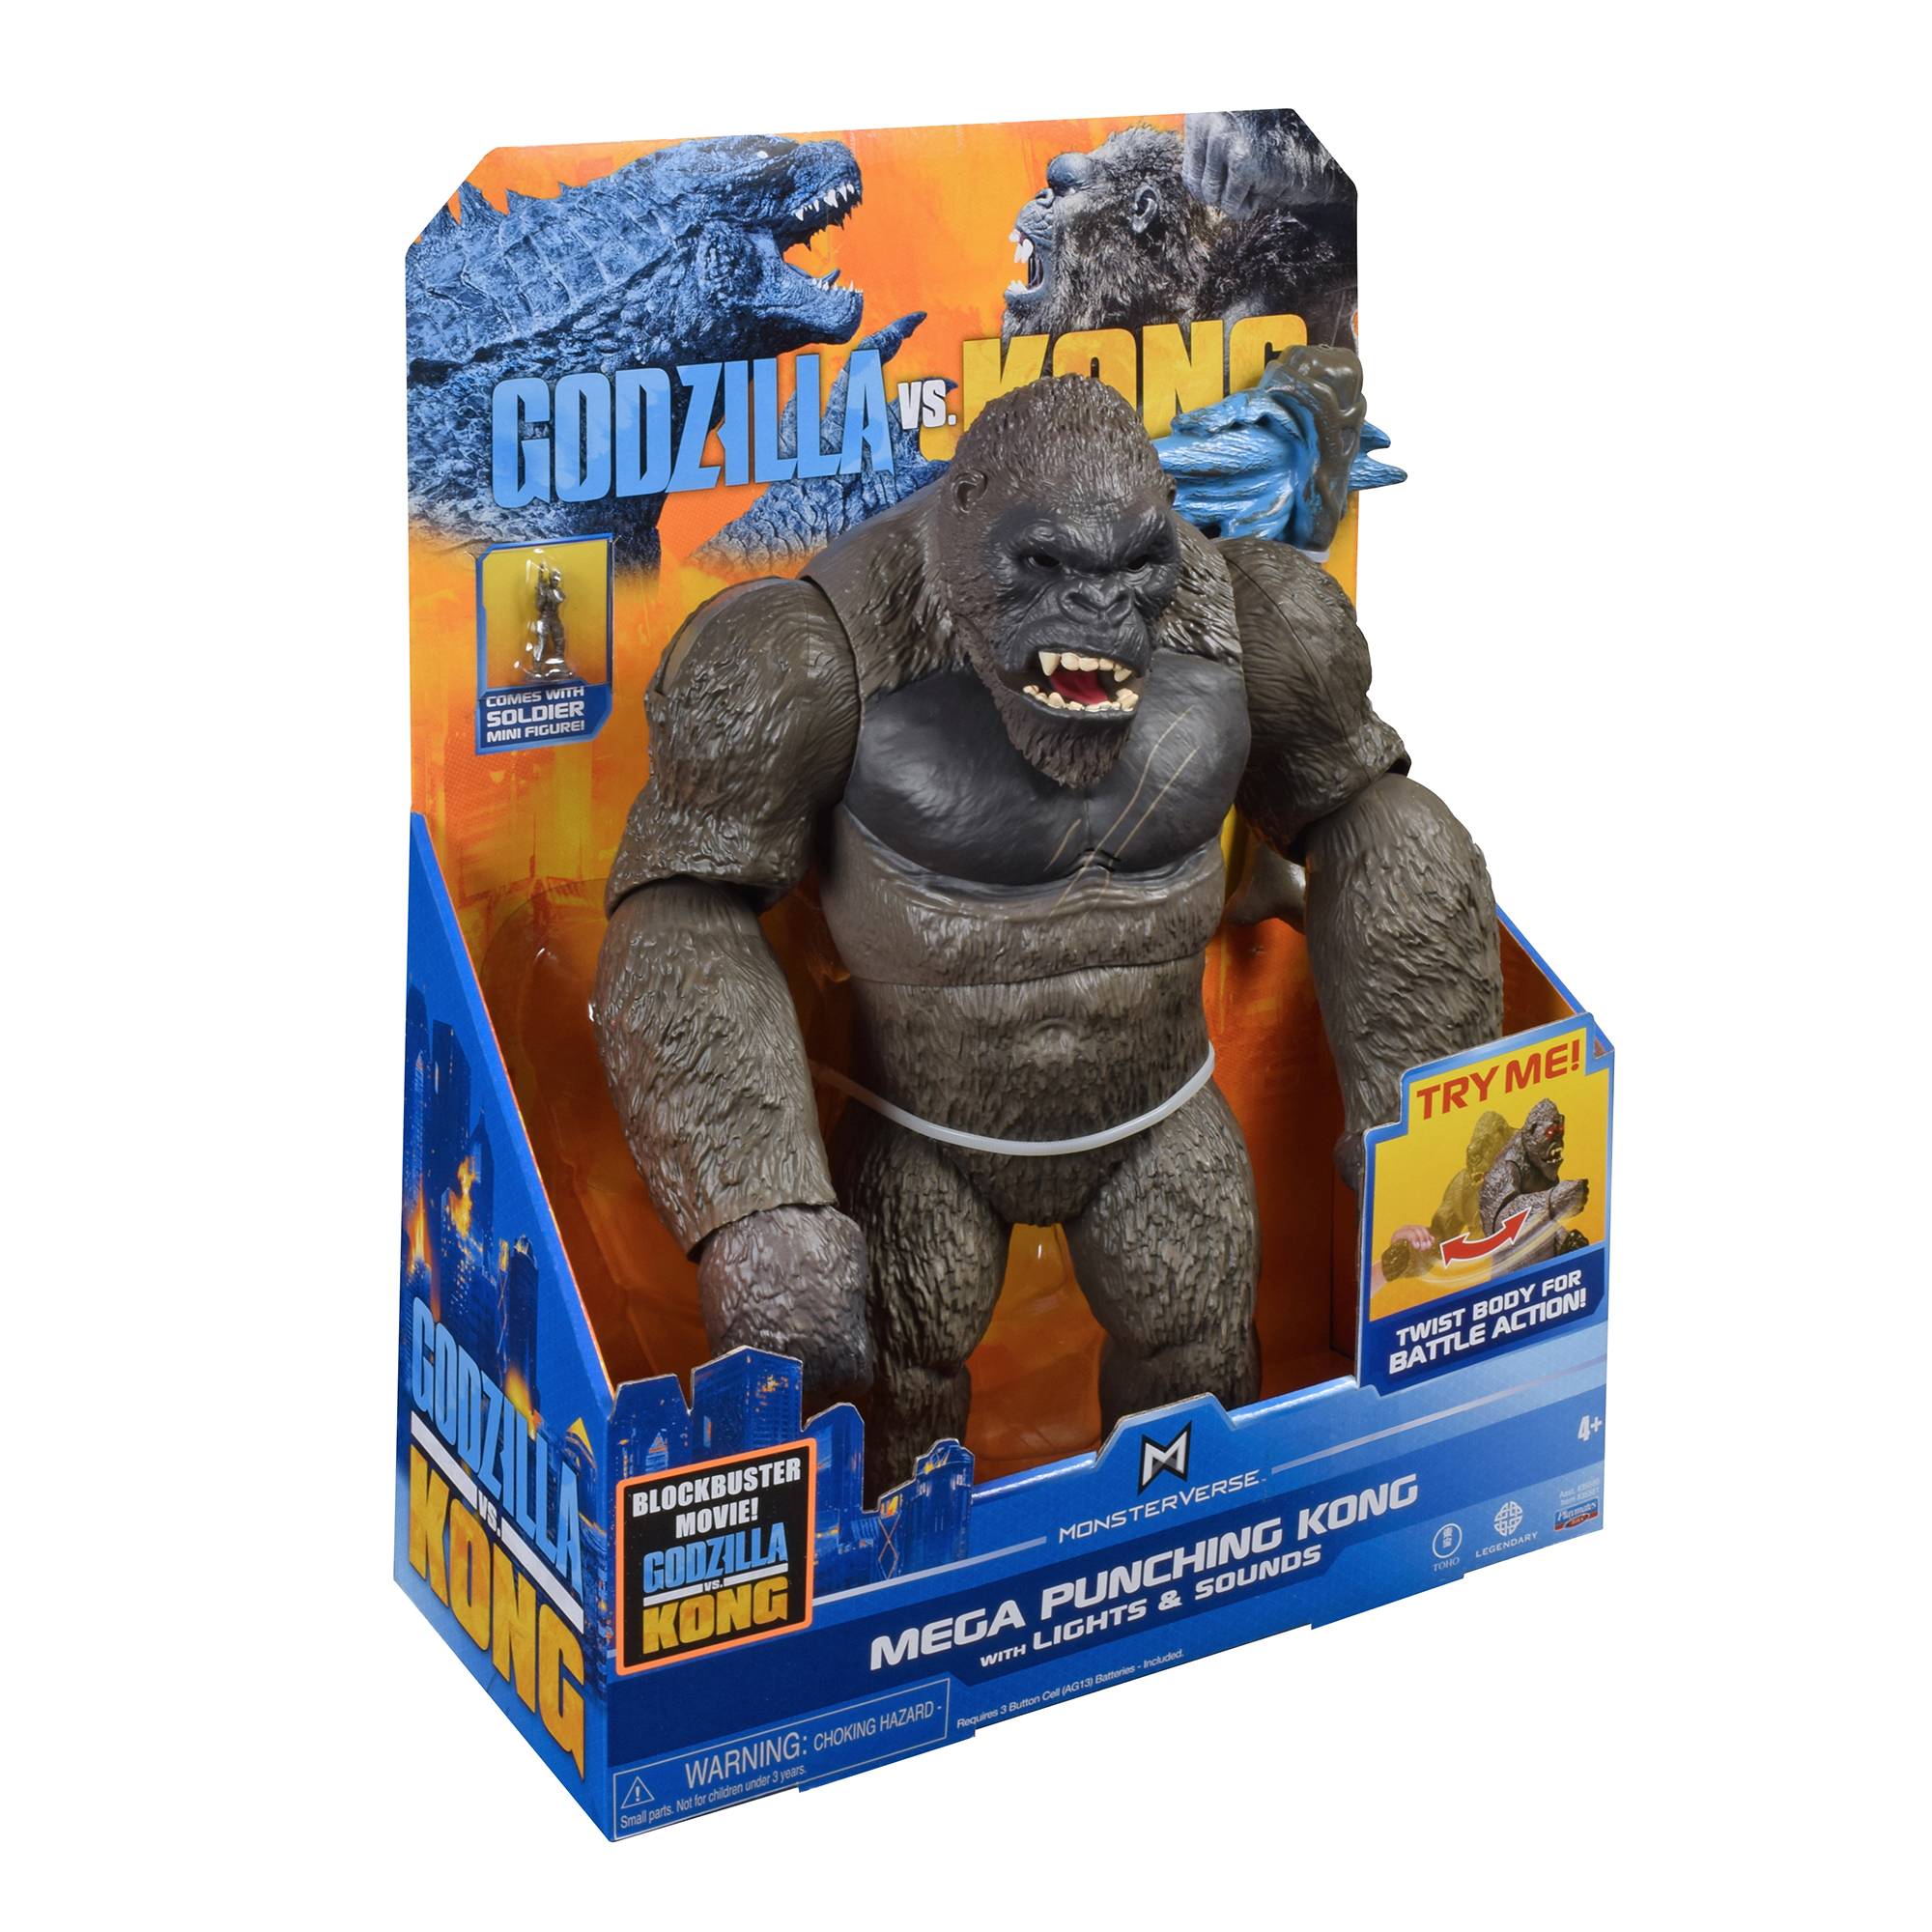 Конг игрушка купить. Кинг Конг игрушка 2021. Фигурка Godzilla vs. Kong – мегагодзилла (33 сm, свет, звук). Игрушка Кинг-Конга игрушка Годзилла. Конг 2021 фигурка.